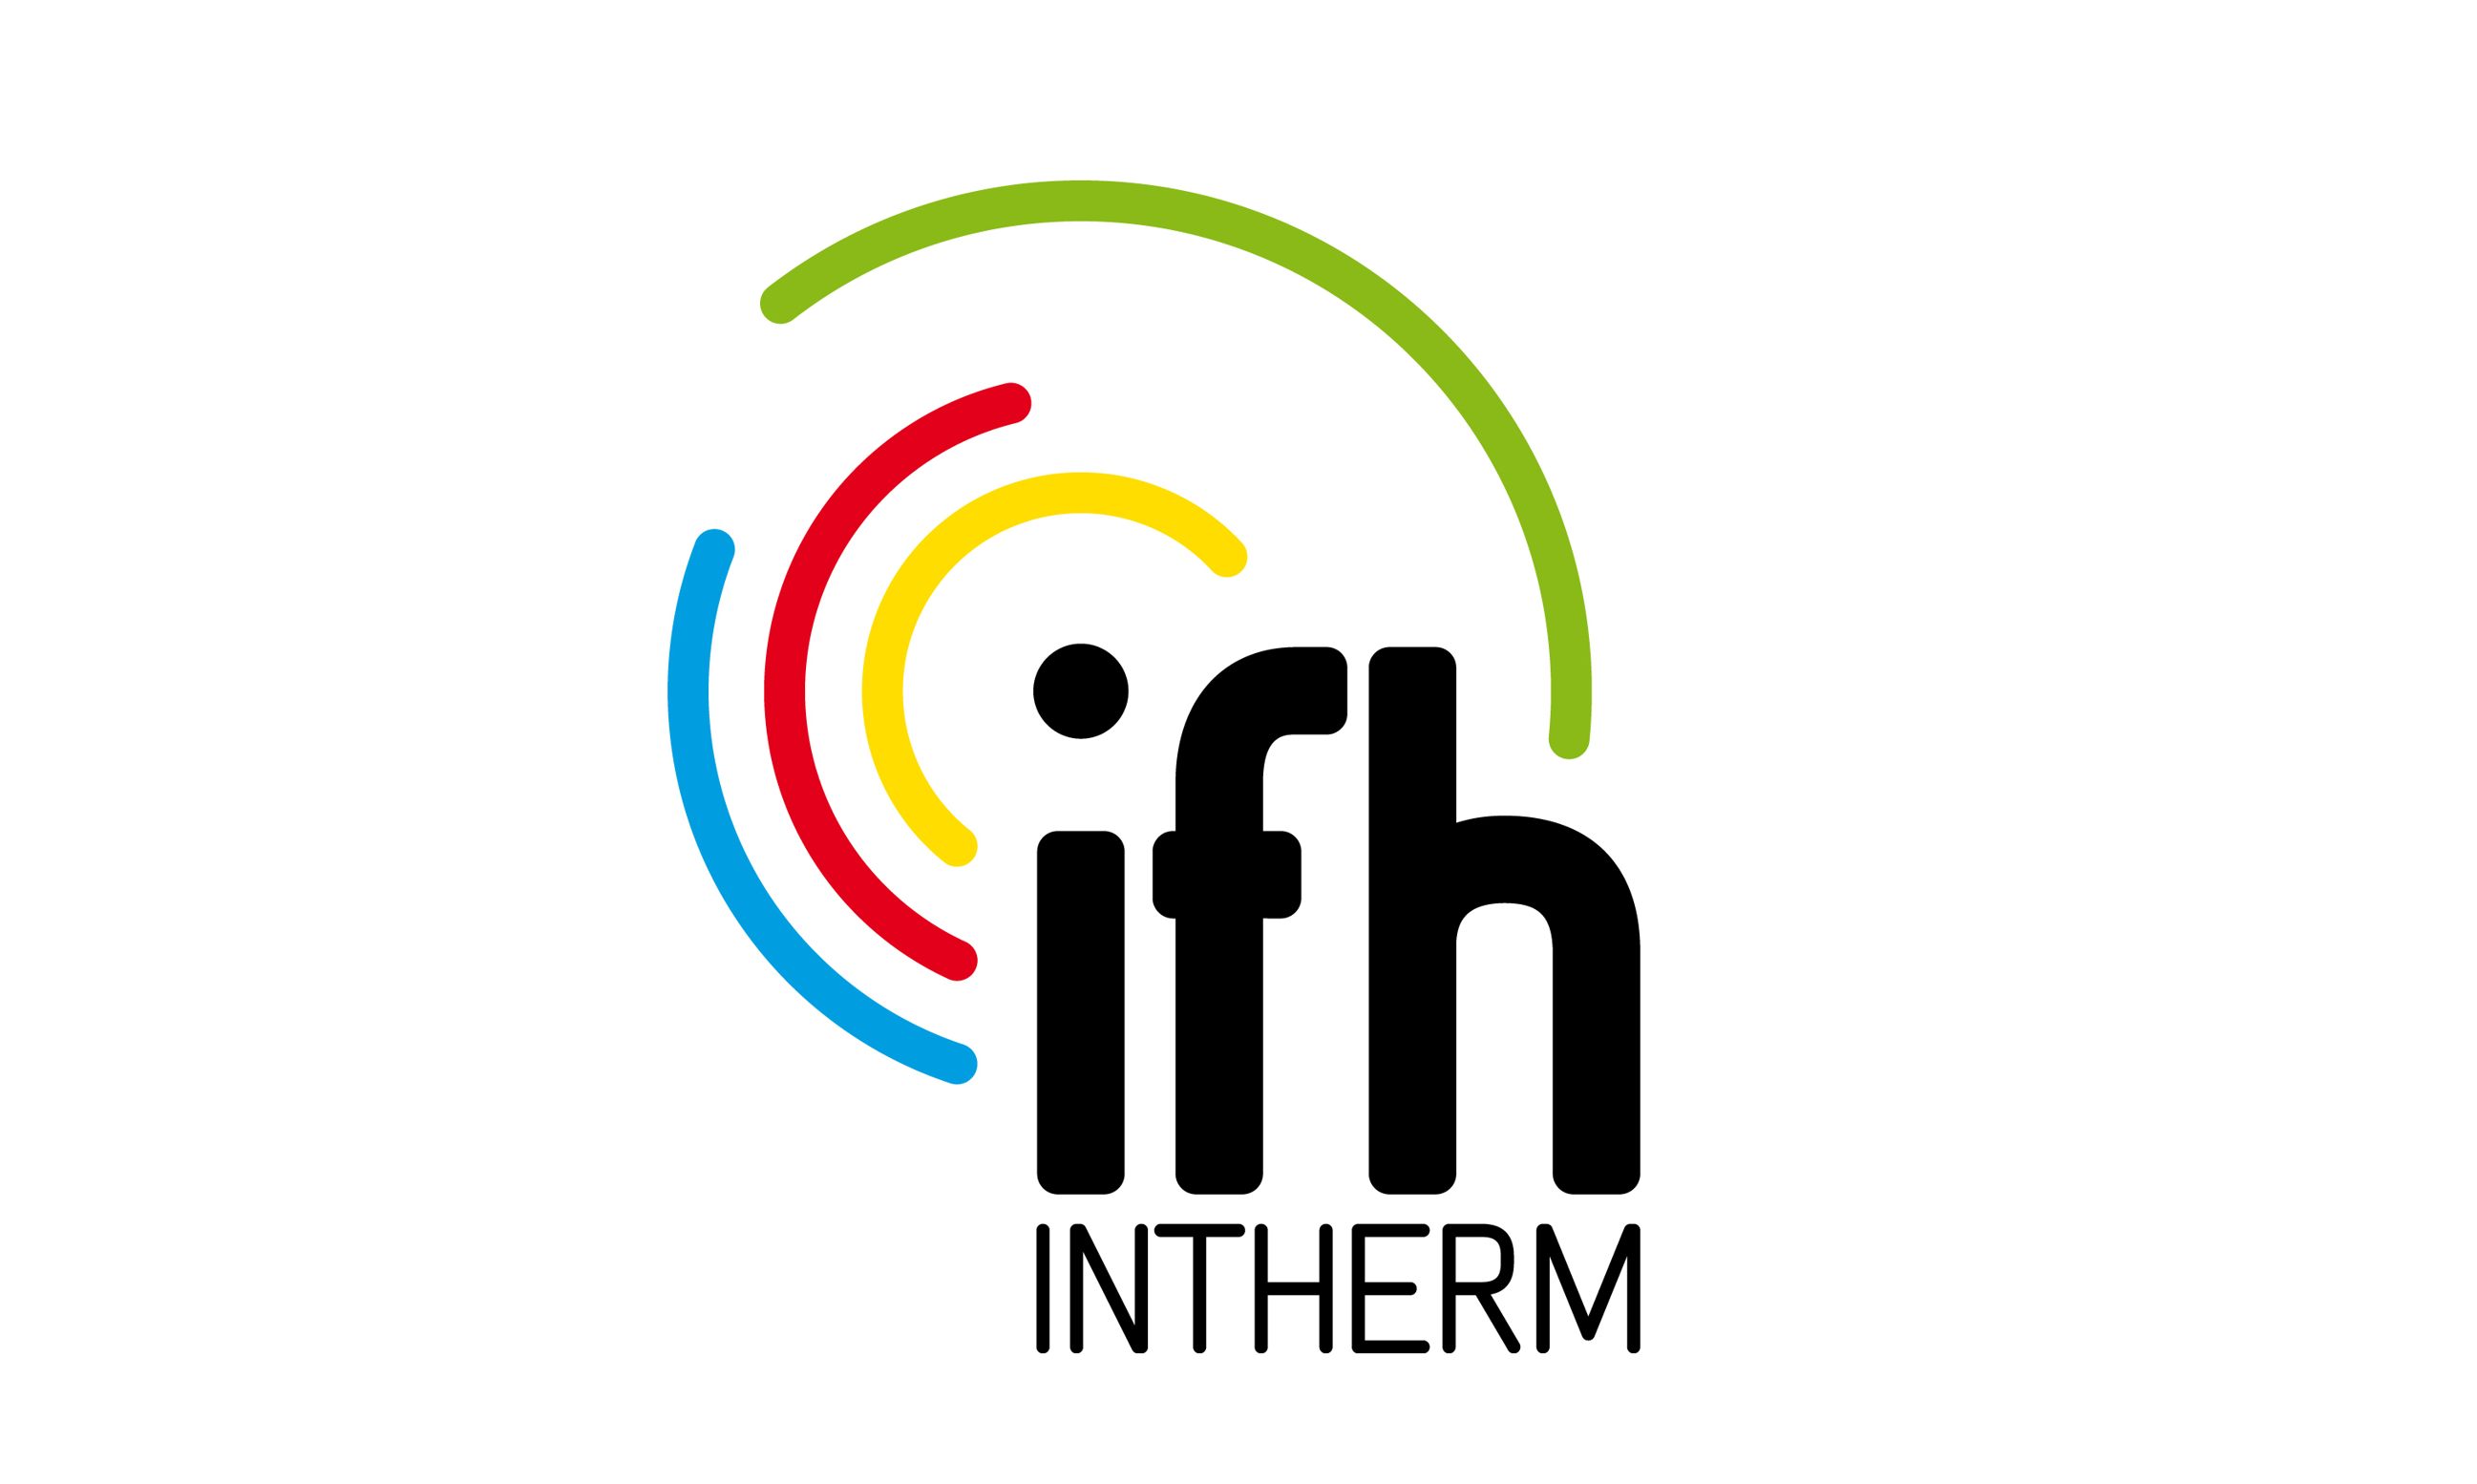 IFH Intherm 2022